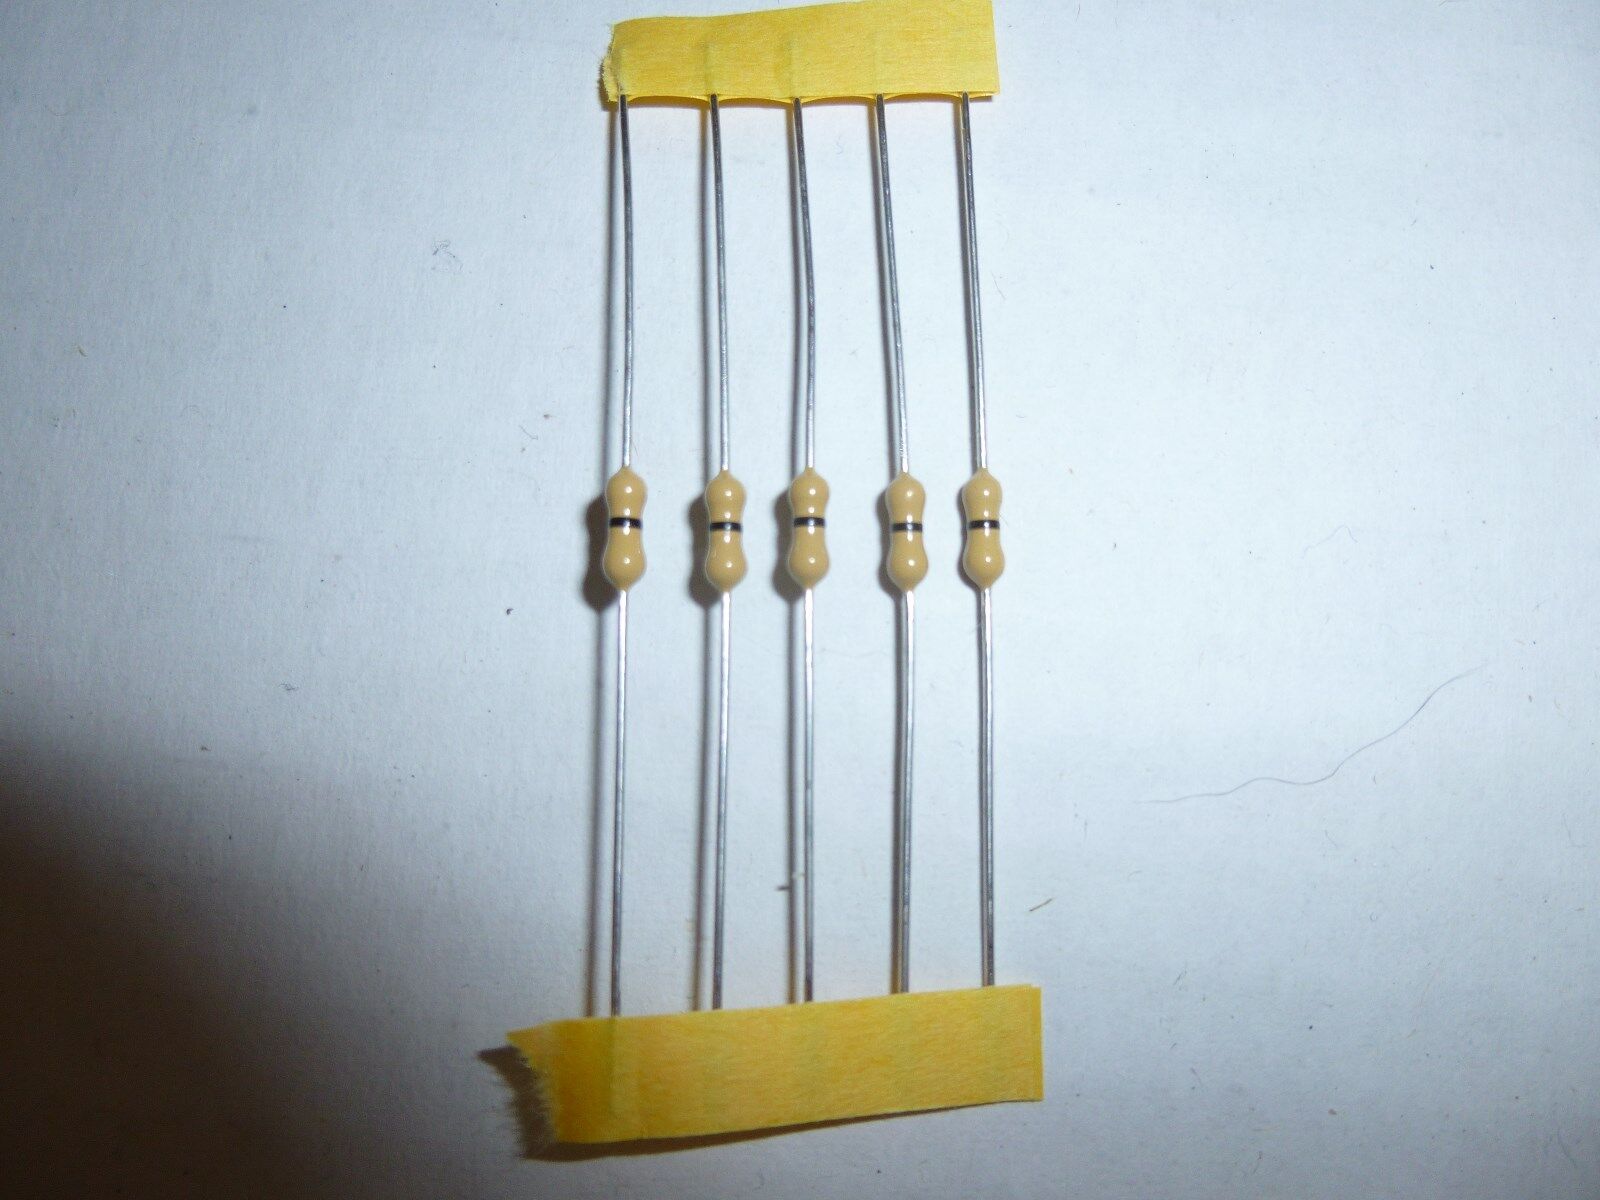 15 Ohm 1//8 Watt 1/% Metal Film Resistor 5 Pieces Prime Parts US Seller